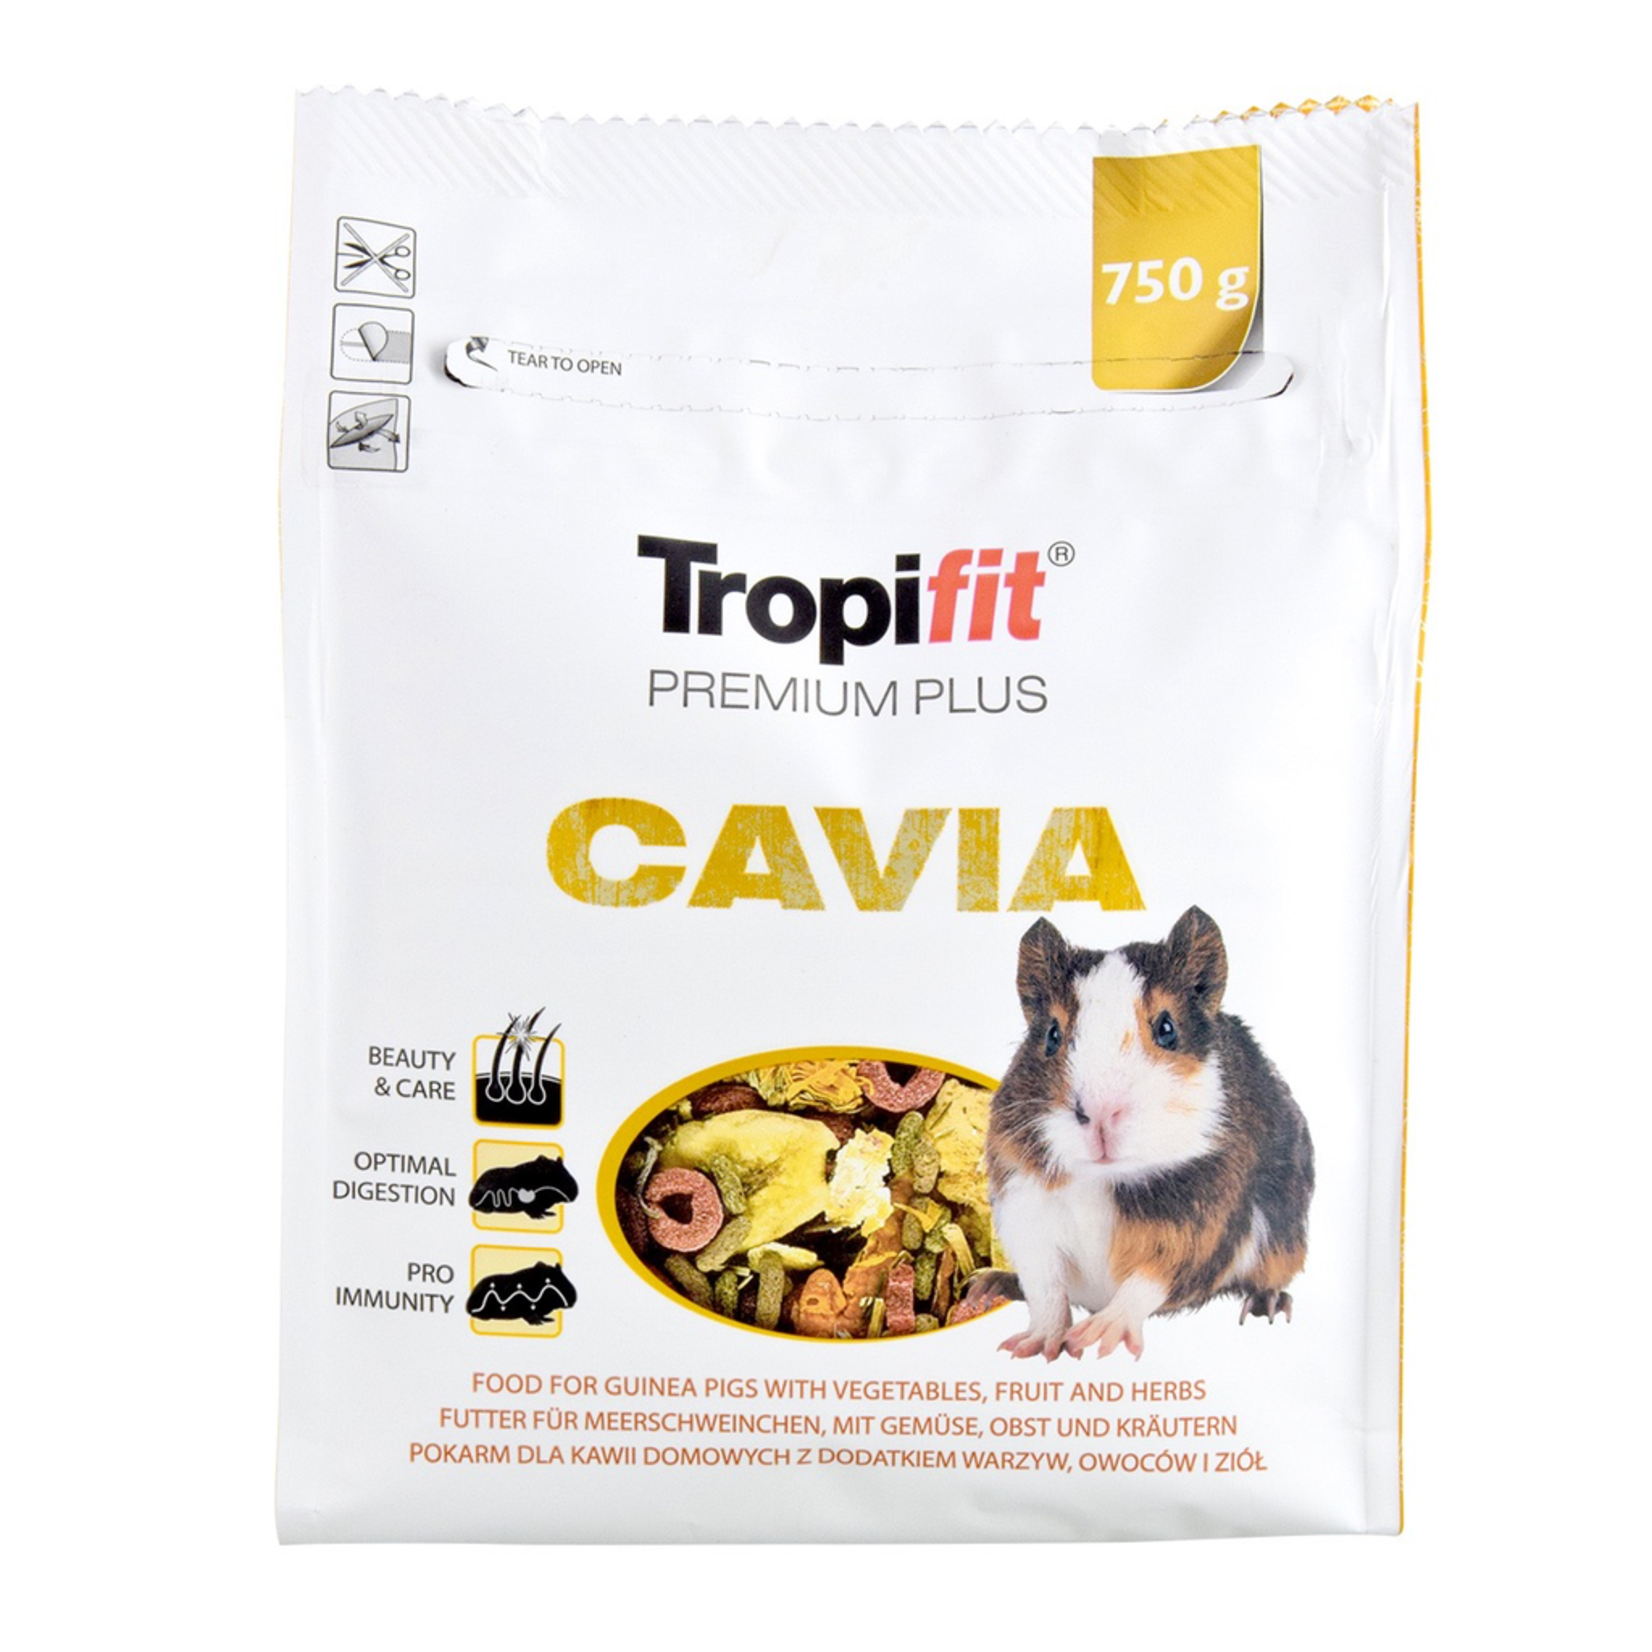 TROPIFIT Tropifit Premium Plus Cavia - 750 g